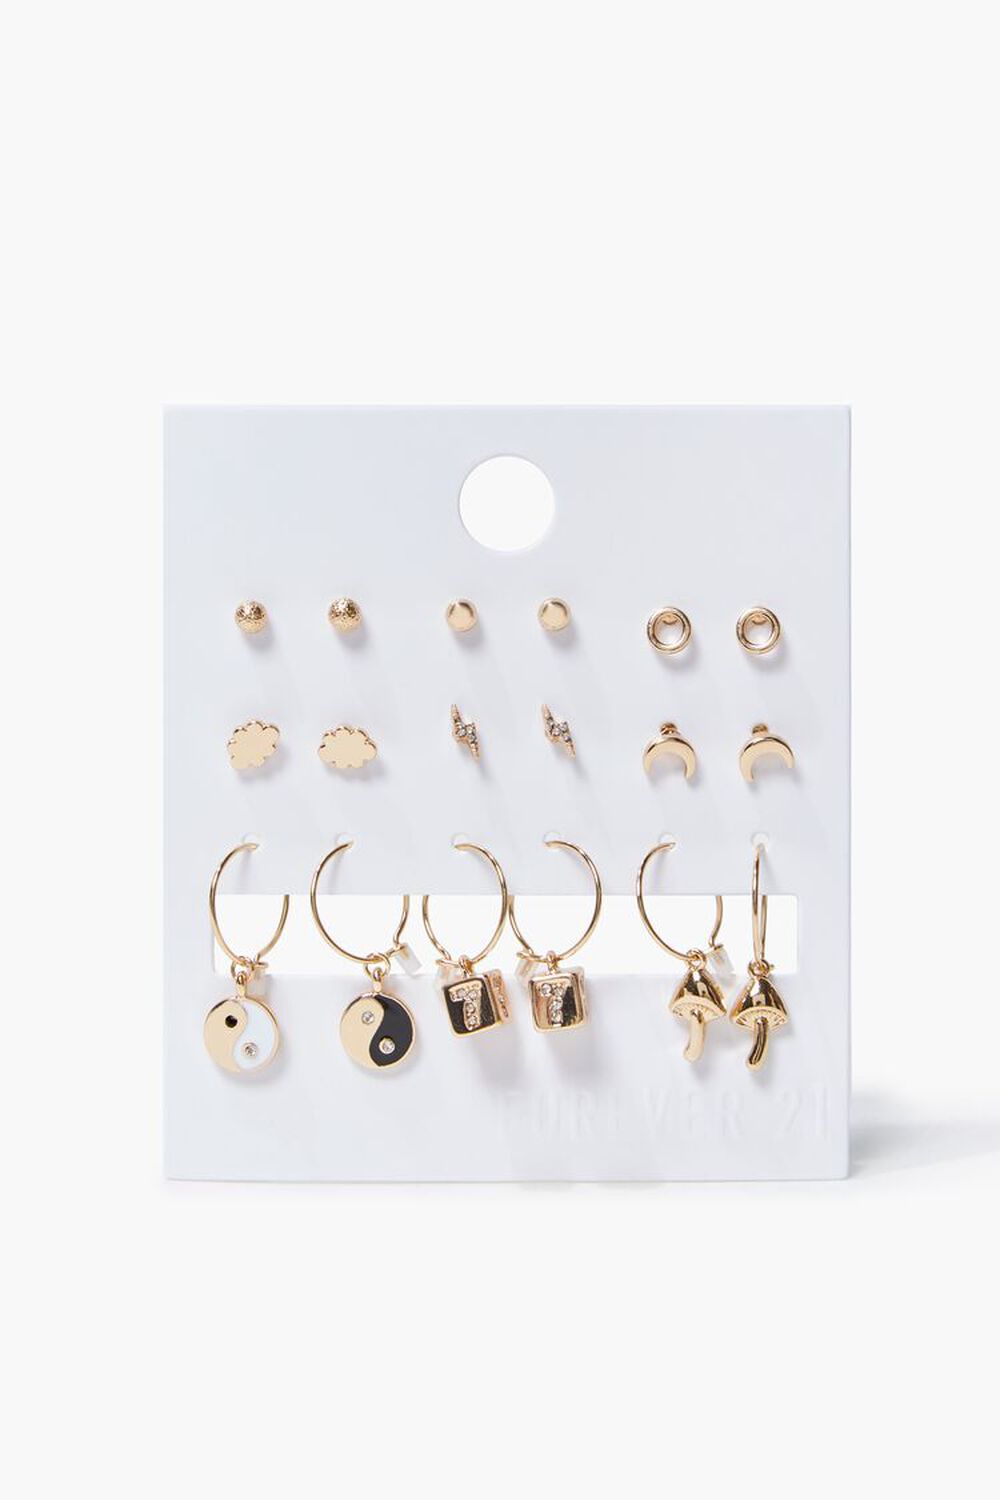 GOLD Variety Stud Earring Set, image 1